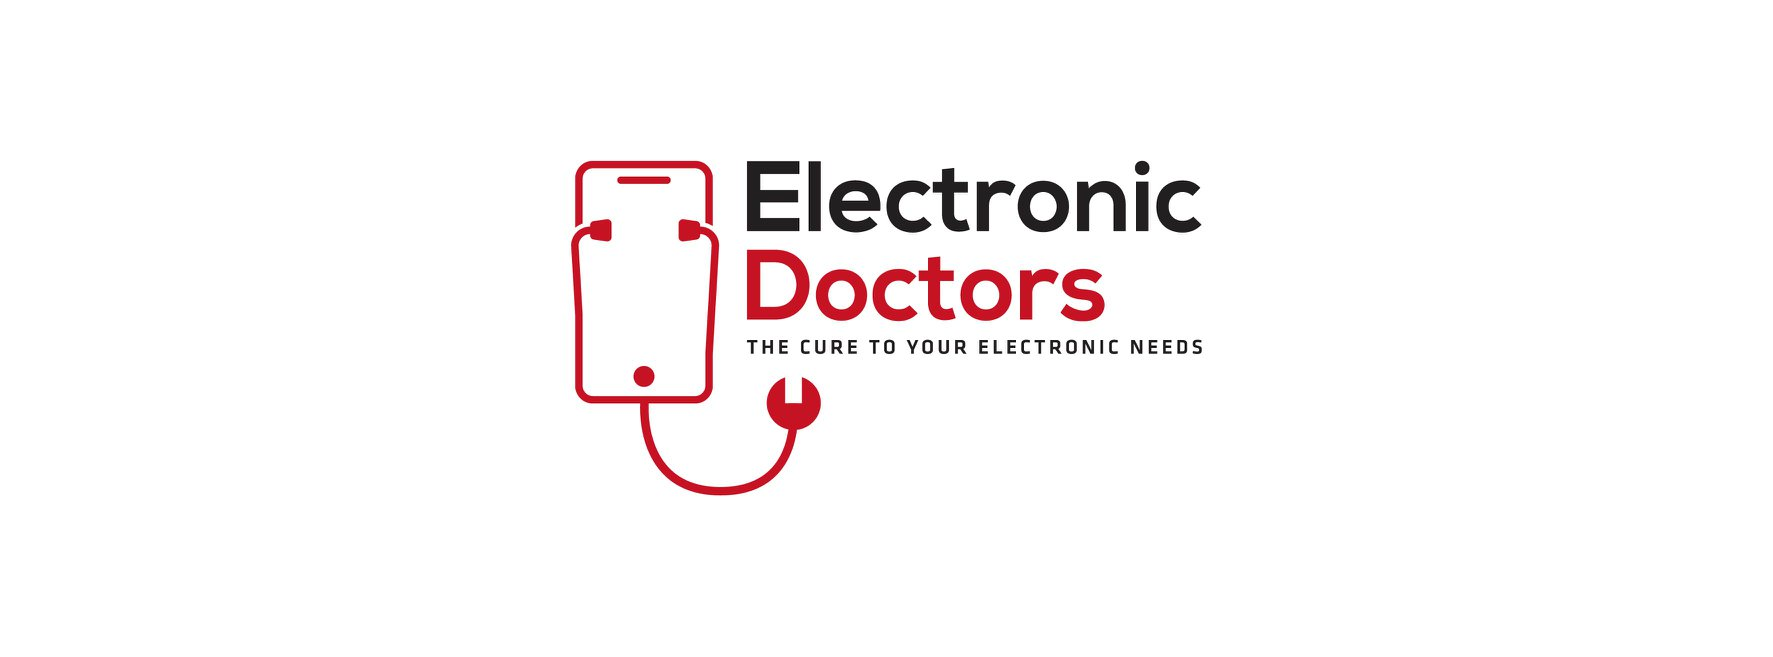 Electronic Doctors